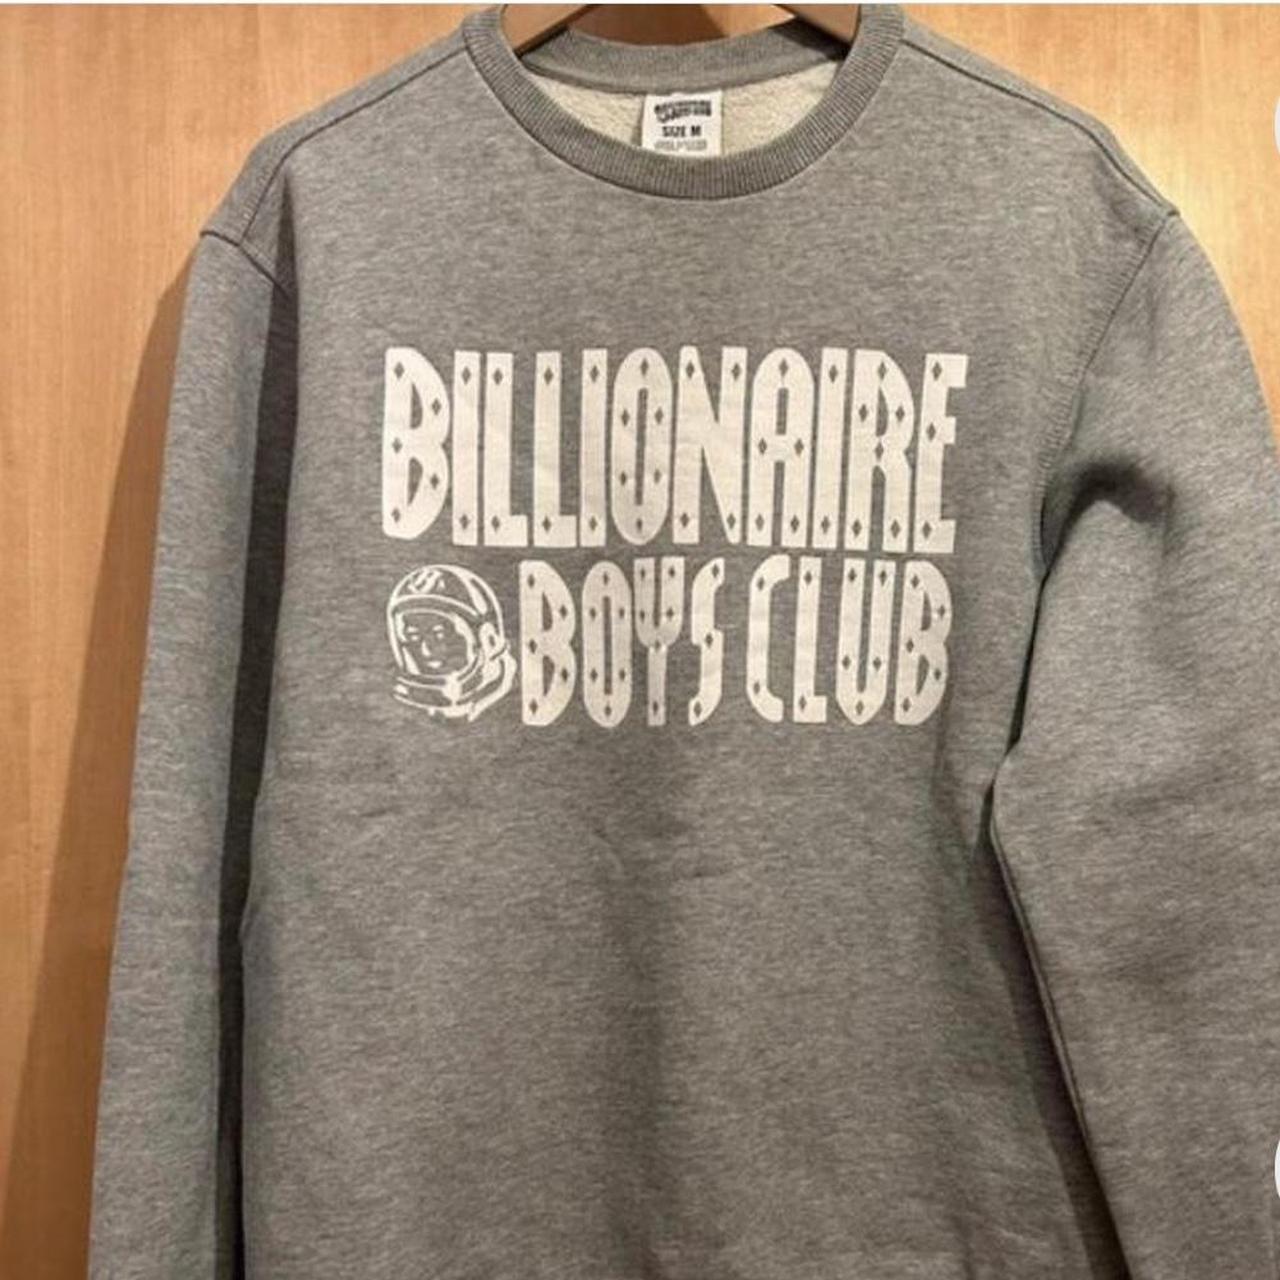 Billionaire boys club jumper men’s grey jumper size... - Depop